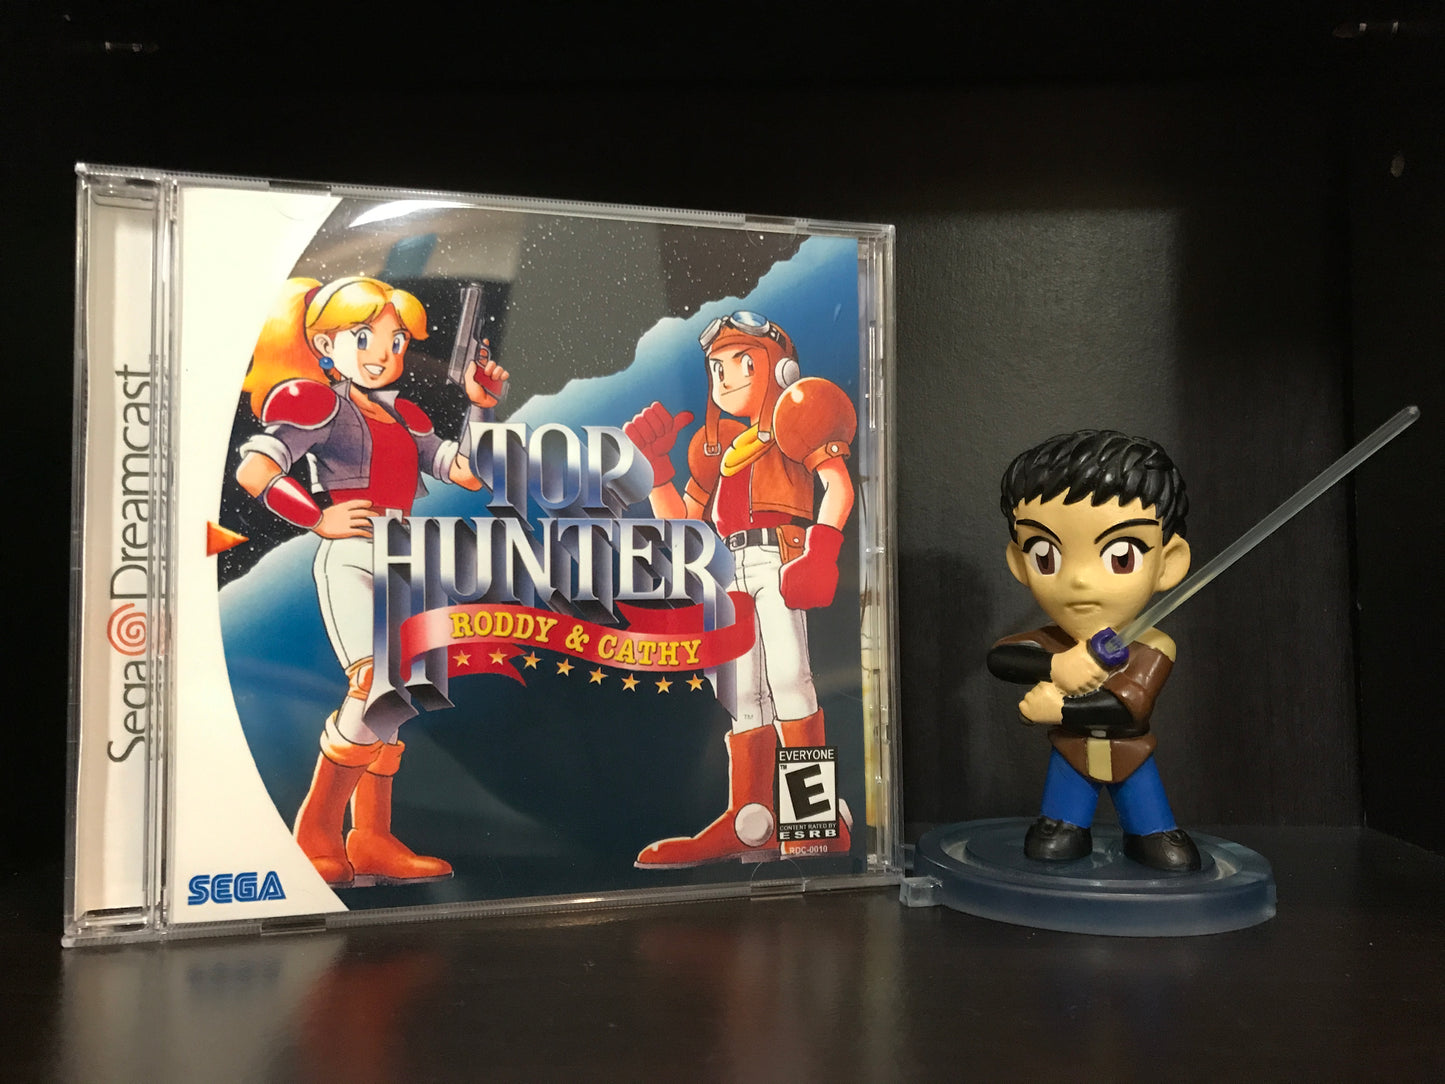 Top Hunter: Roddy & Cathy [Sega Dreamcast] Reproduction